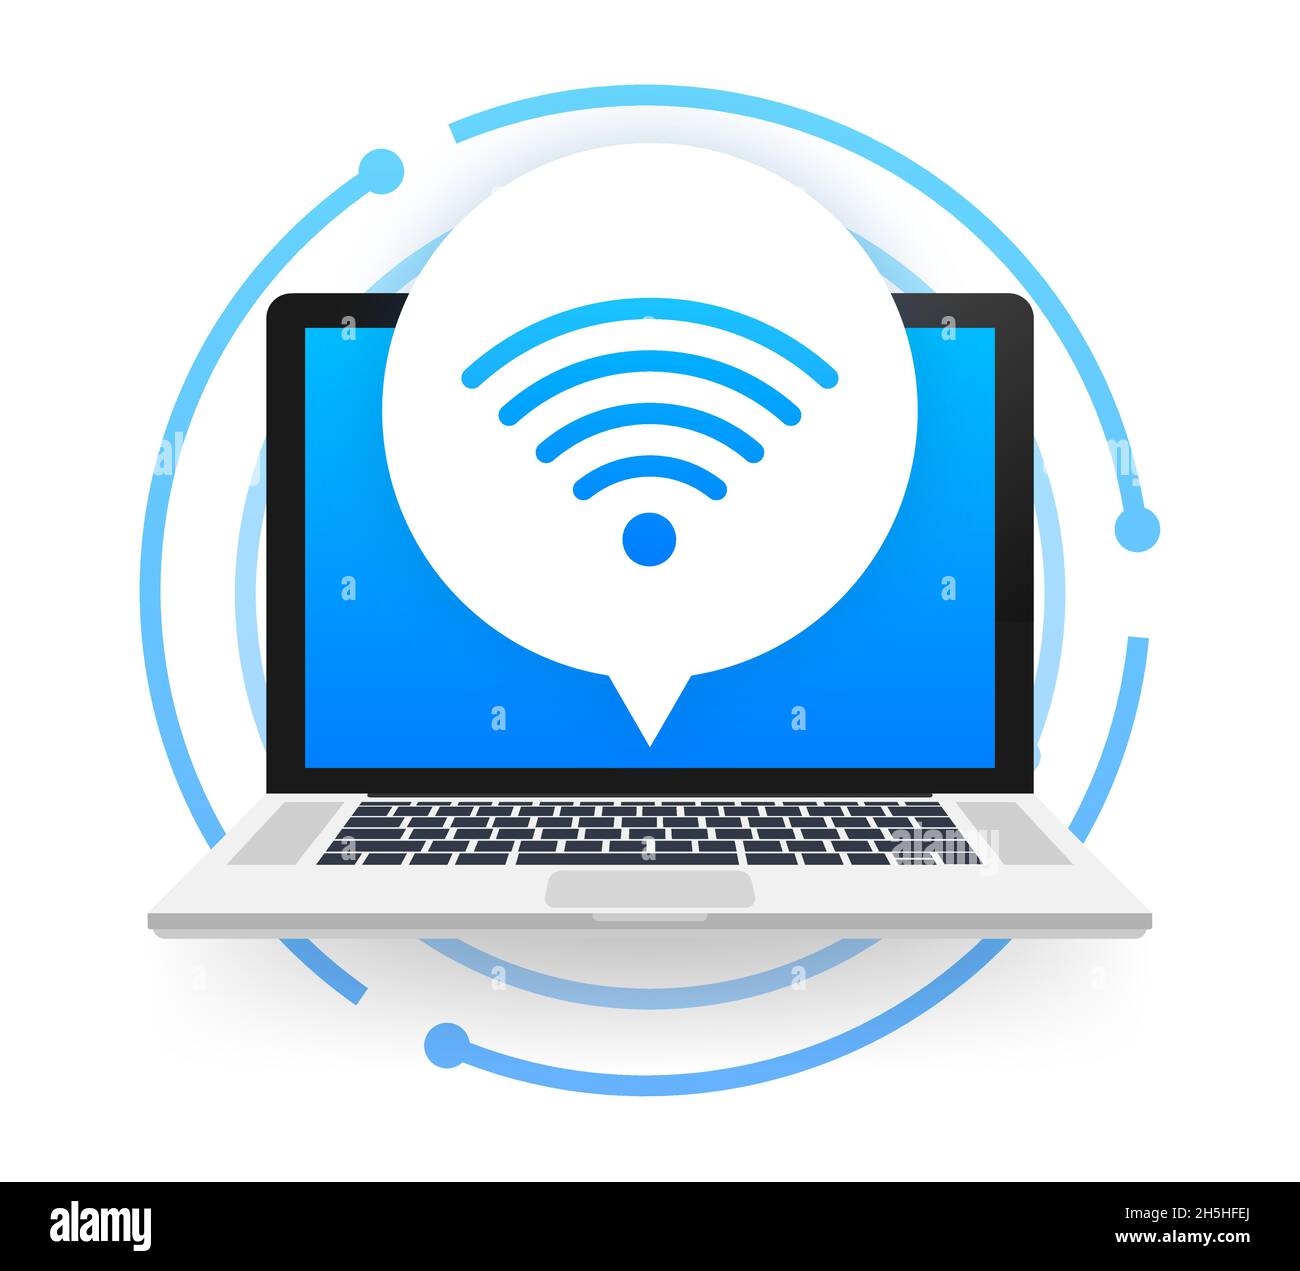 Wireless-Technologie. WiFi-Internetverbindung auf dem Laptop-Bildschirm. Vektorgrafik. Stock Vektor